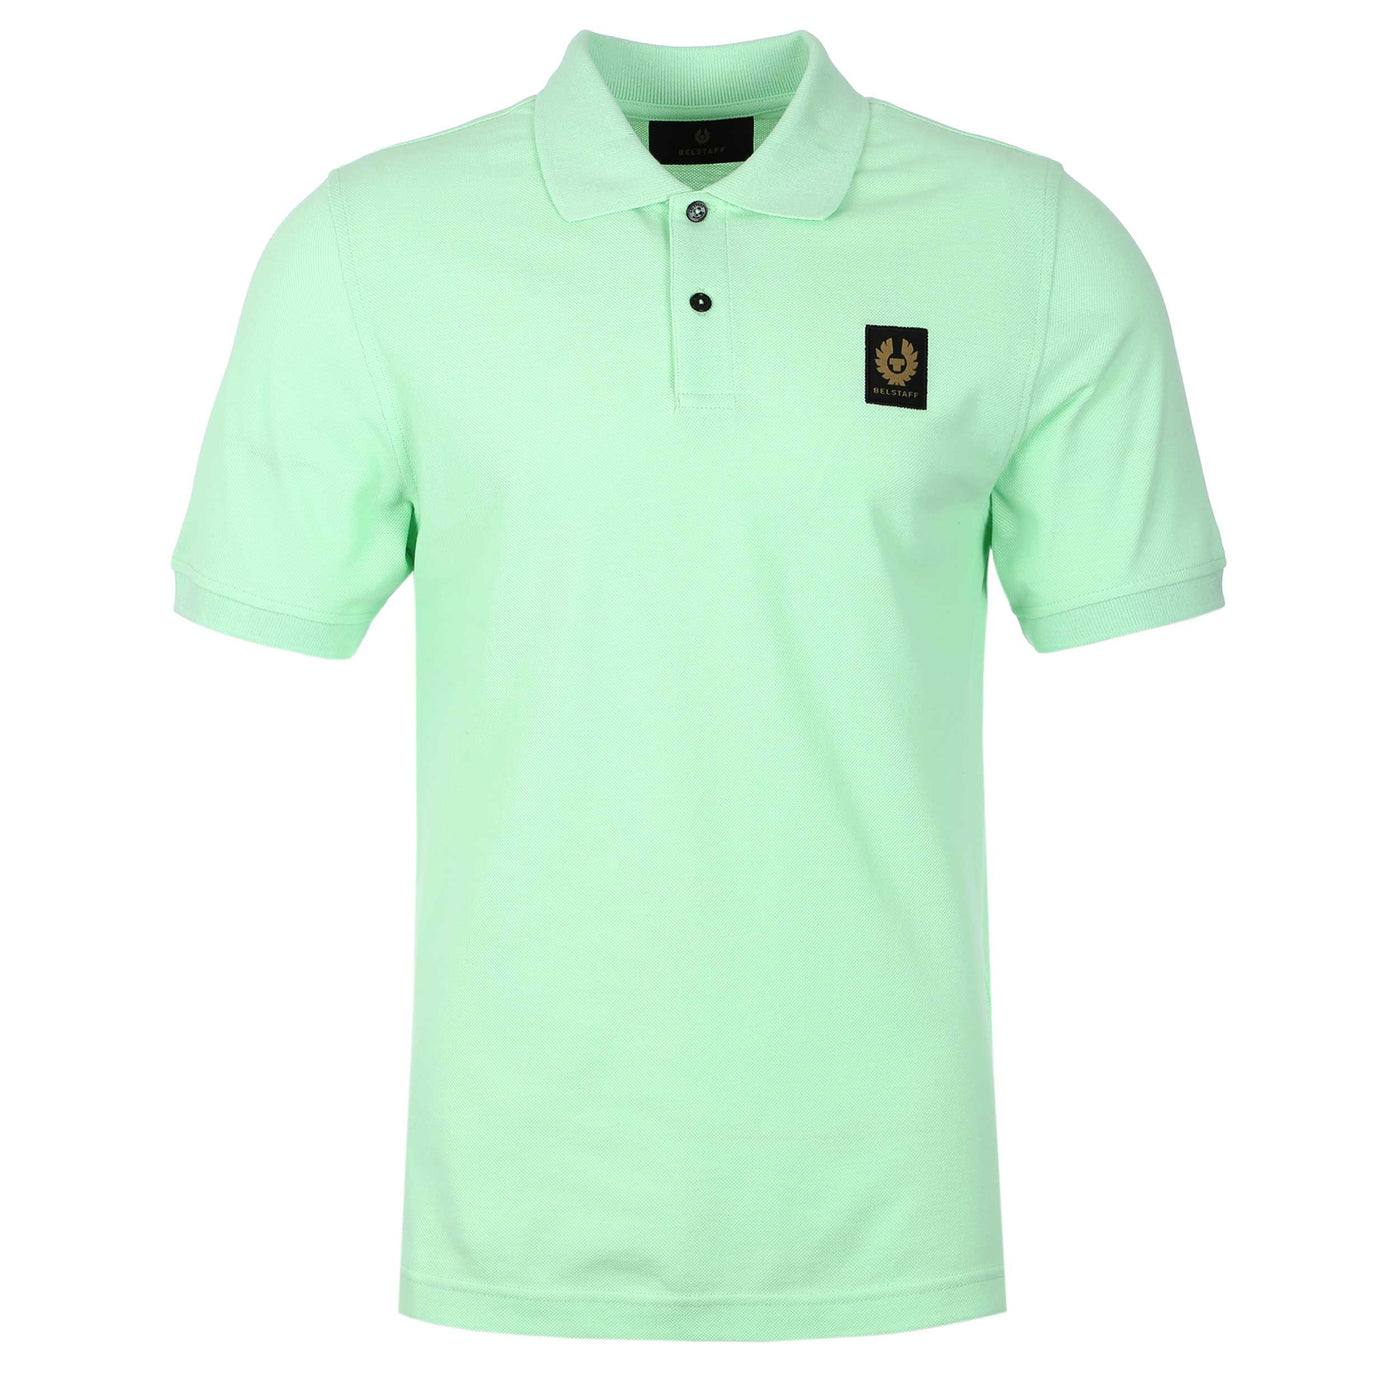 Belstaff Classic Short Sleeve Polo Shirt in New Leaf Green